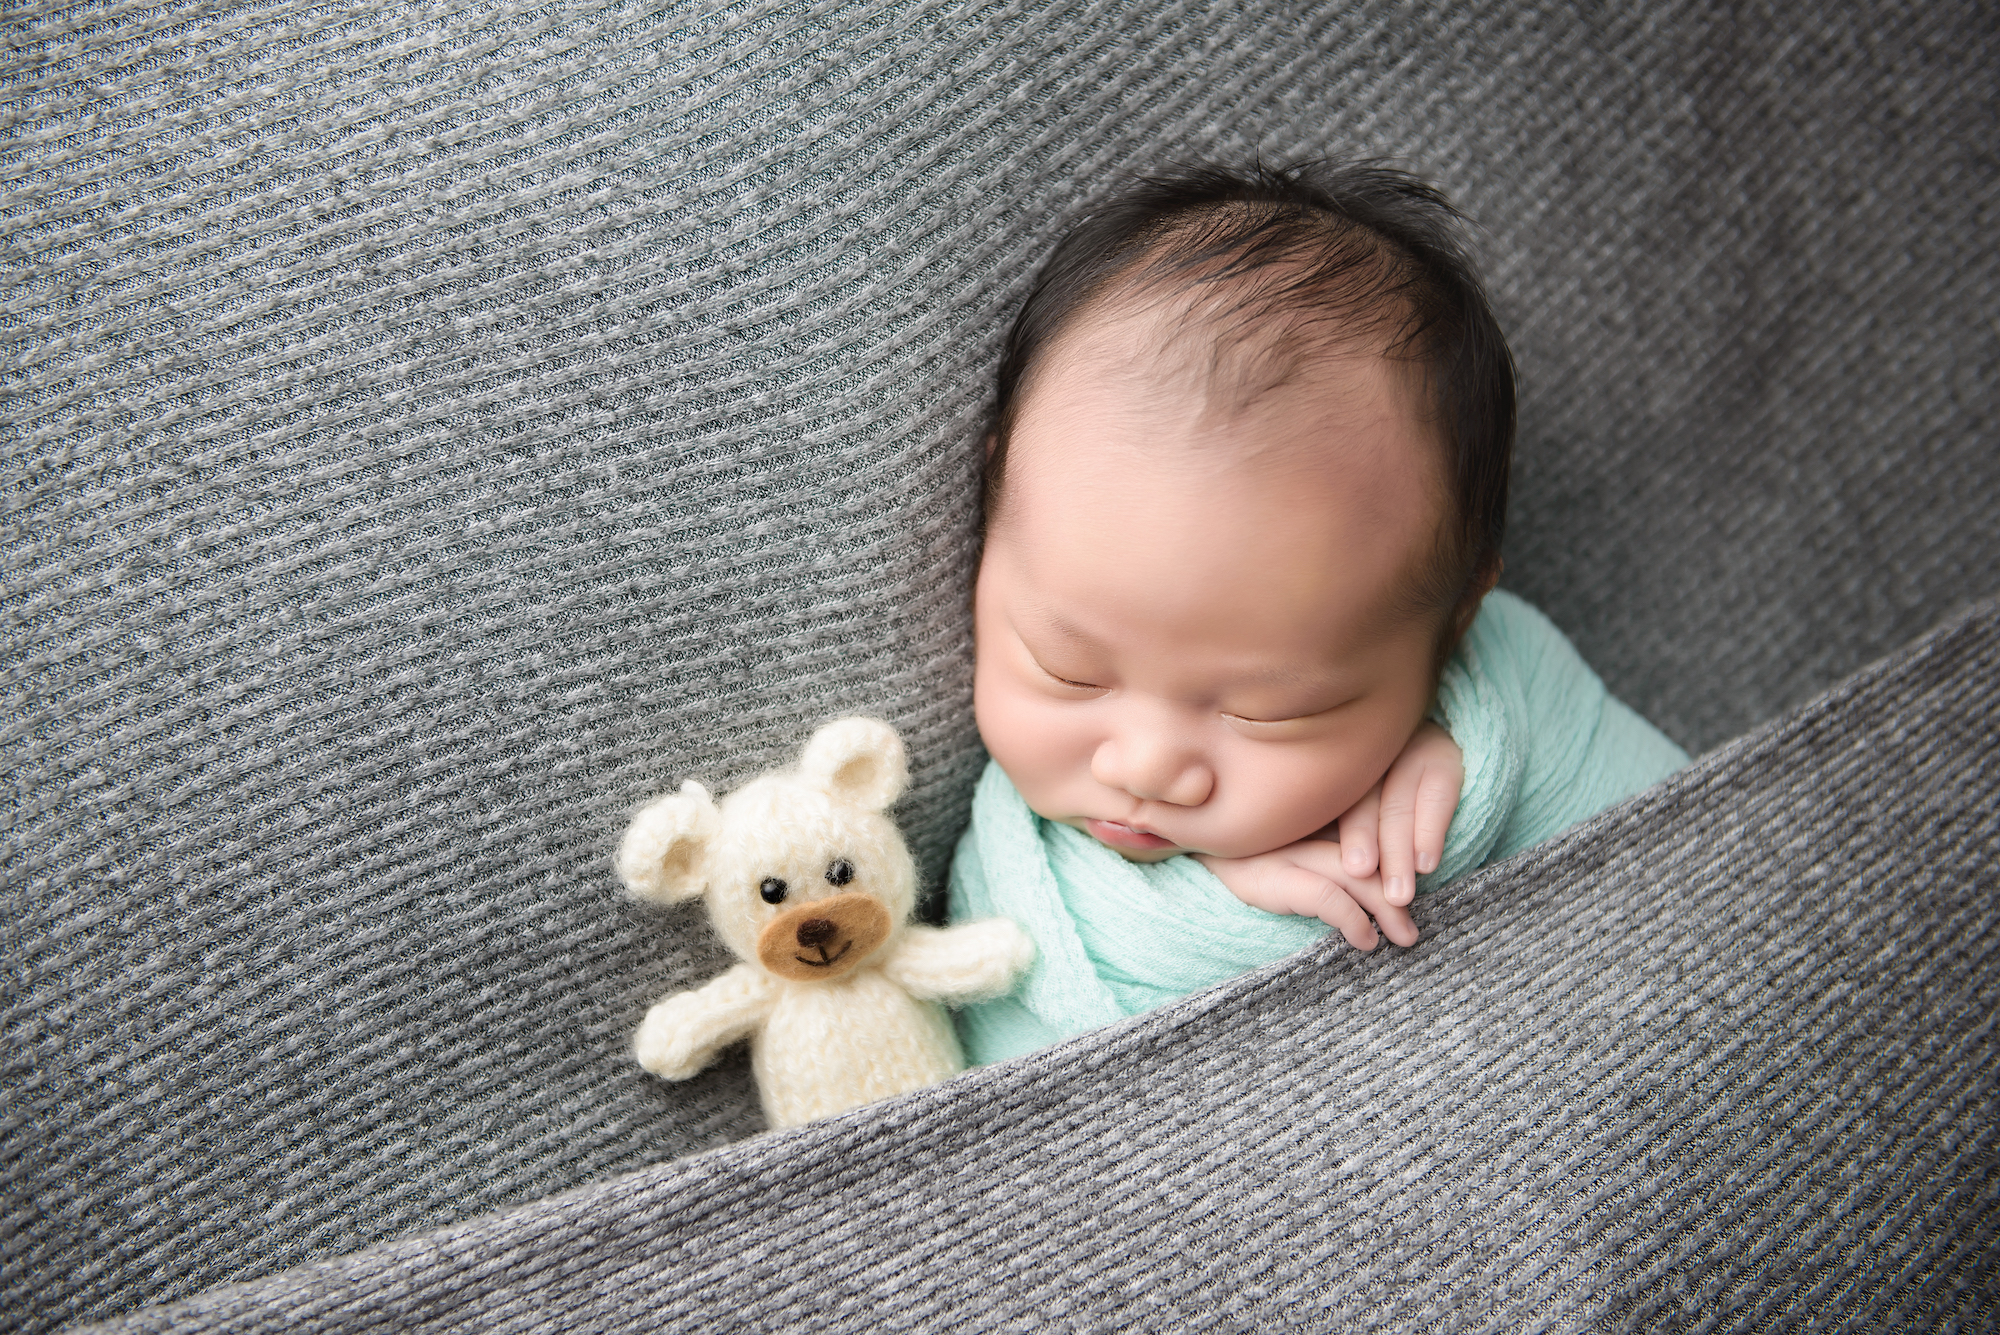 Newborn Baby With Teddy Bear